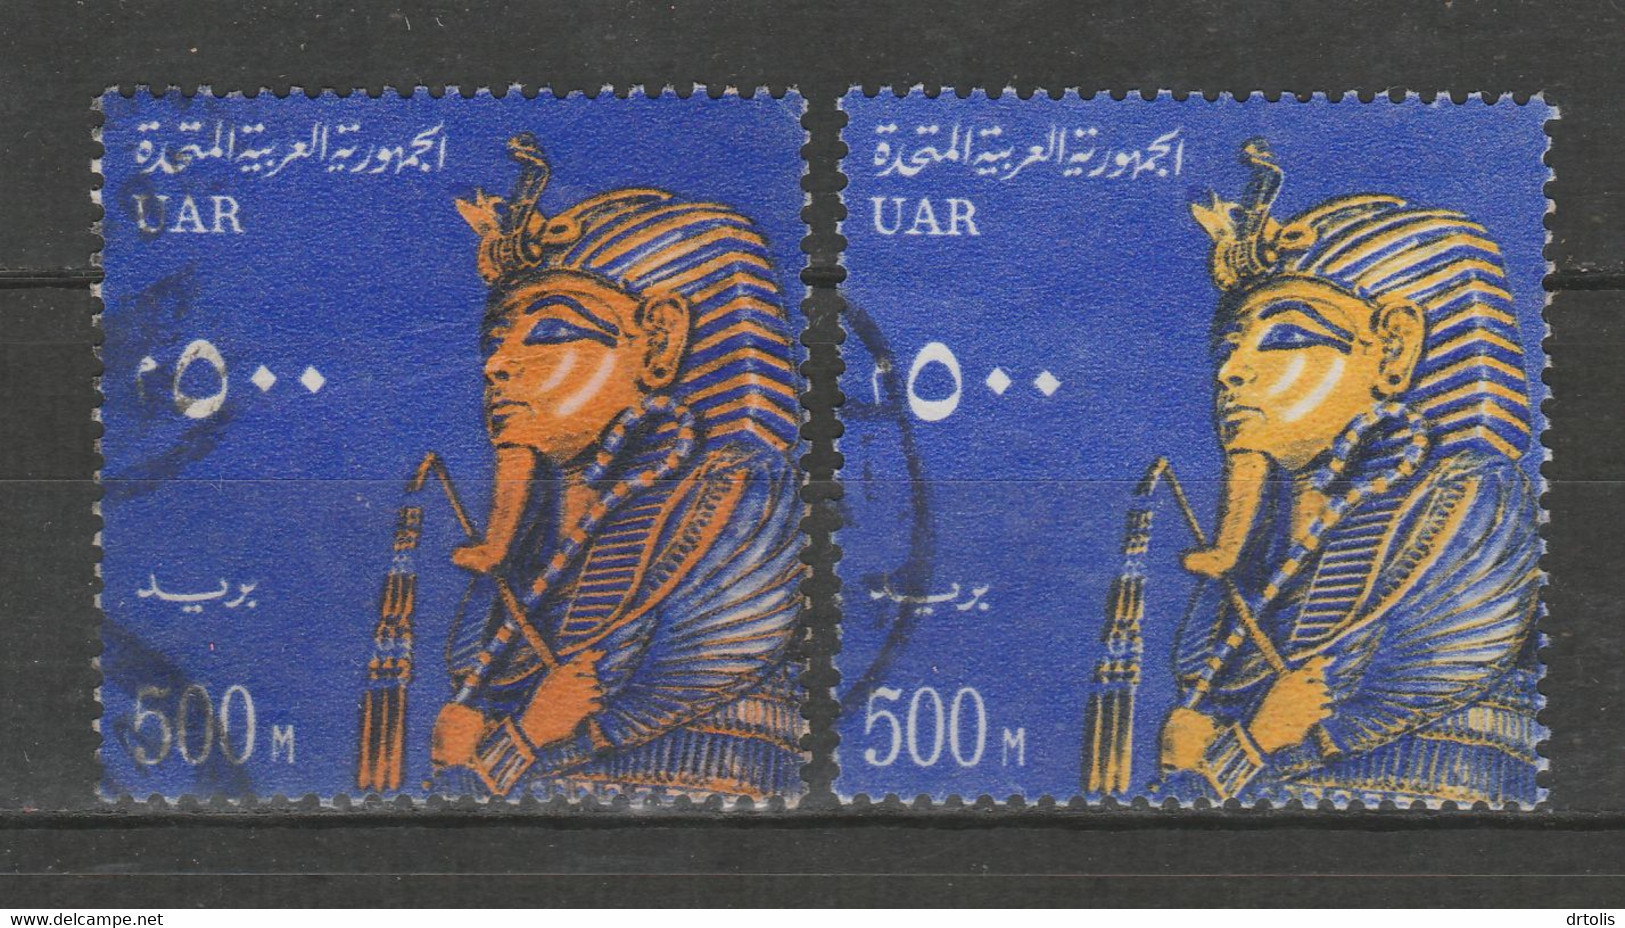 EGYPT / A RARE COLOR VARIETY / VF USED - Gebraucht